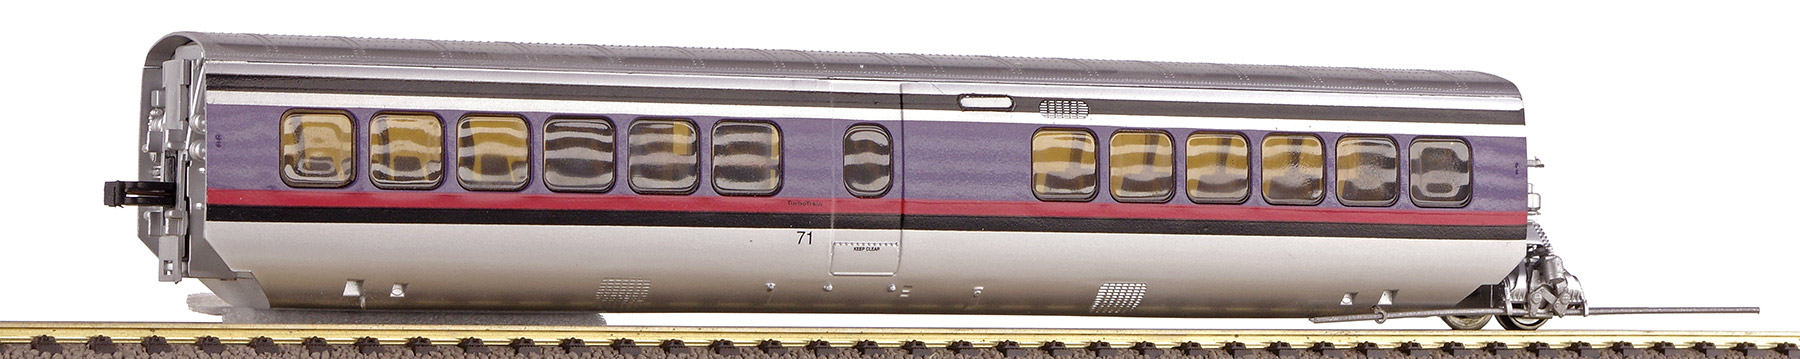 модель Train 16045-85